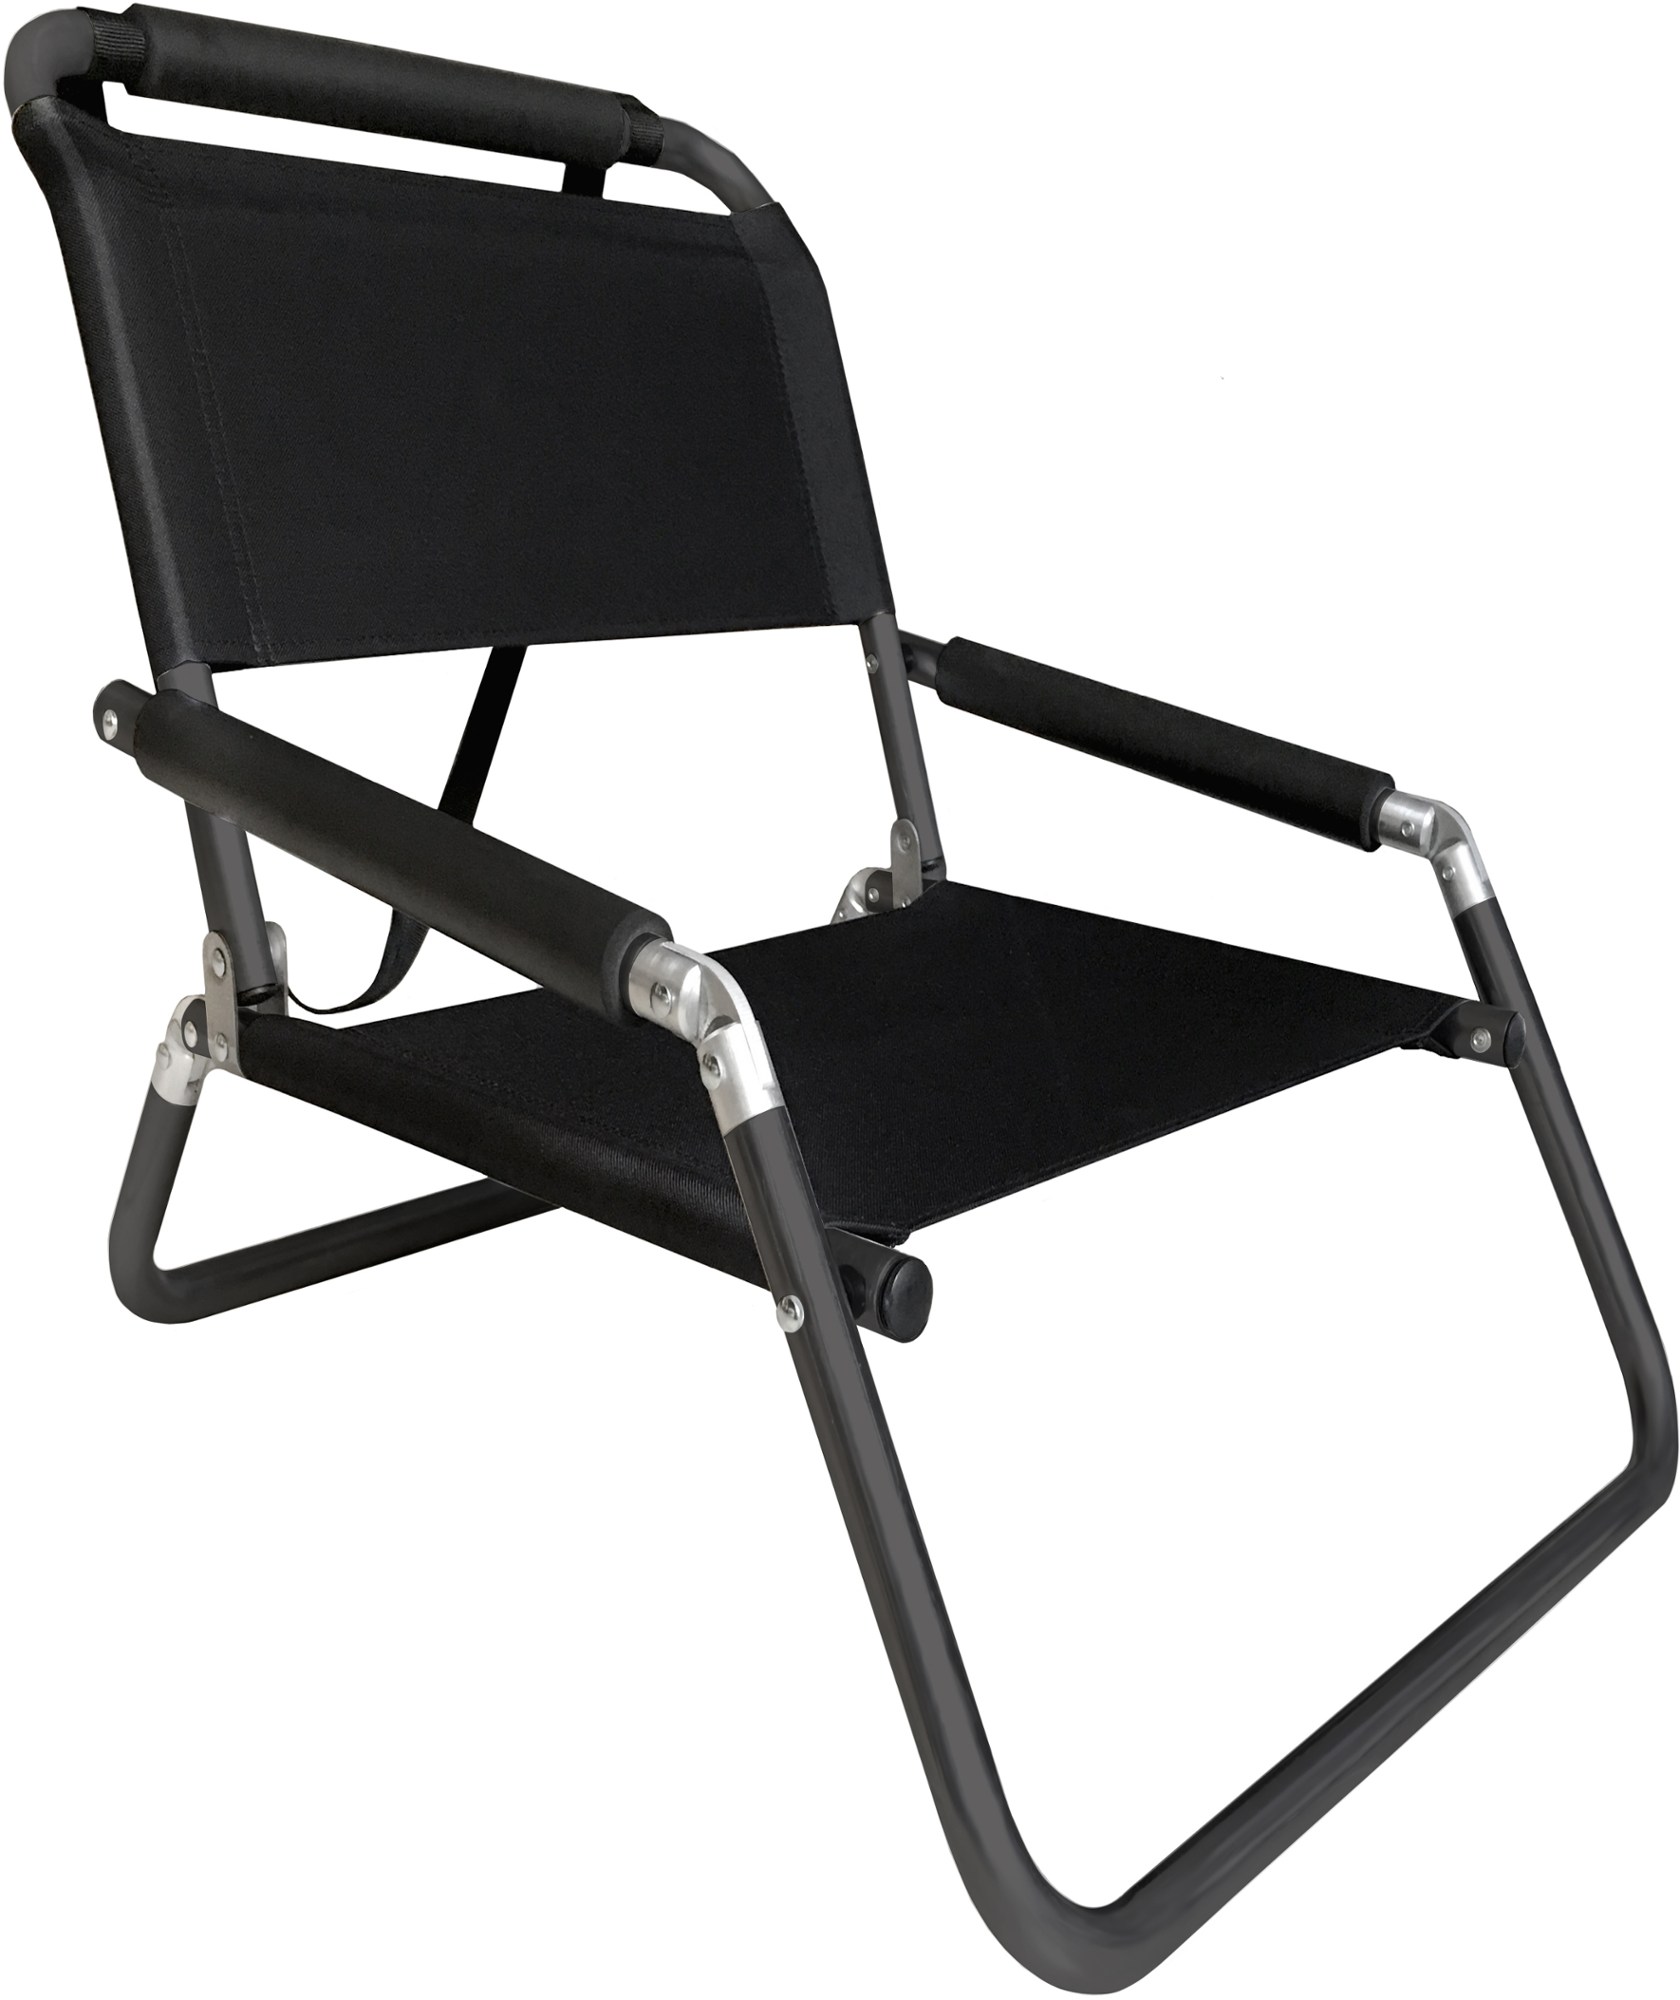 Пляжный стул XL Neso, черный folding reclining chair extendable outdoor beach patio chair adjustable position recliner lounge chair